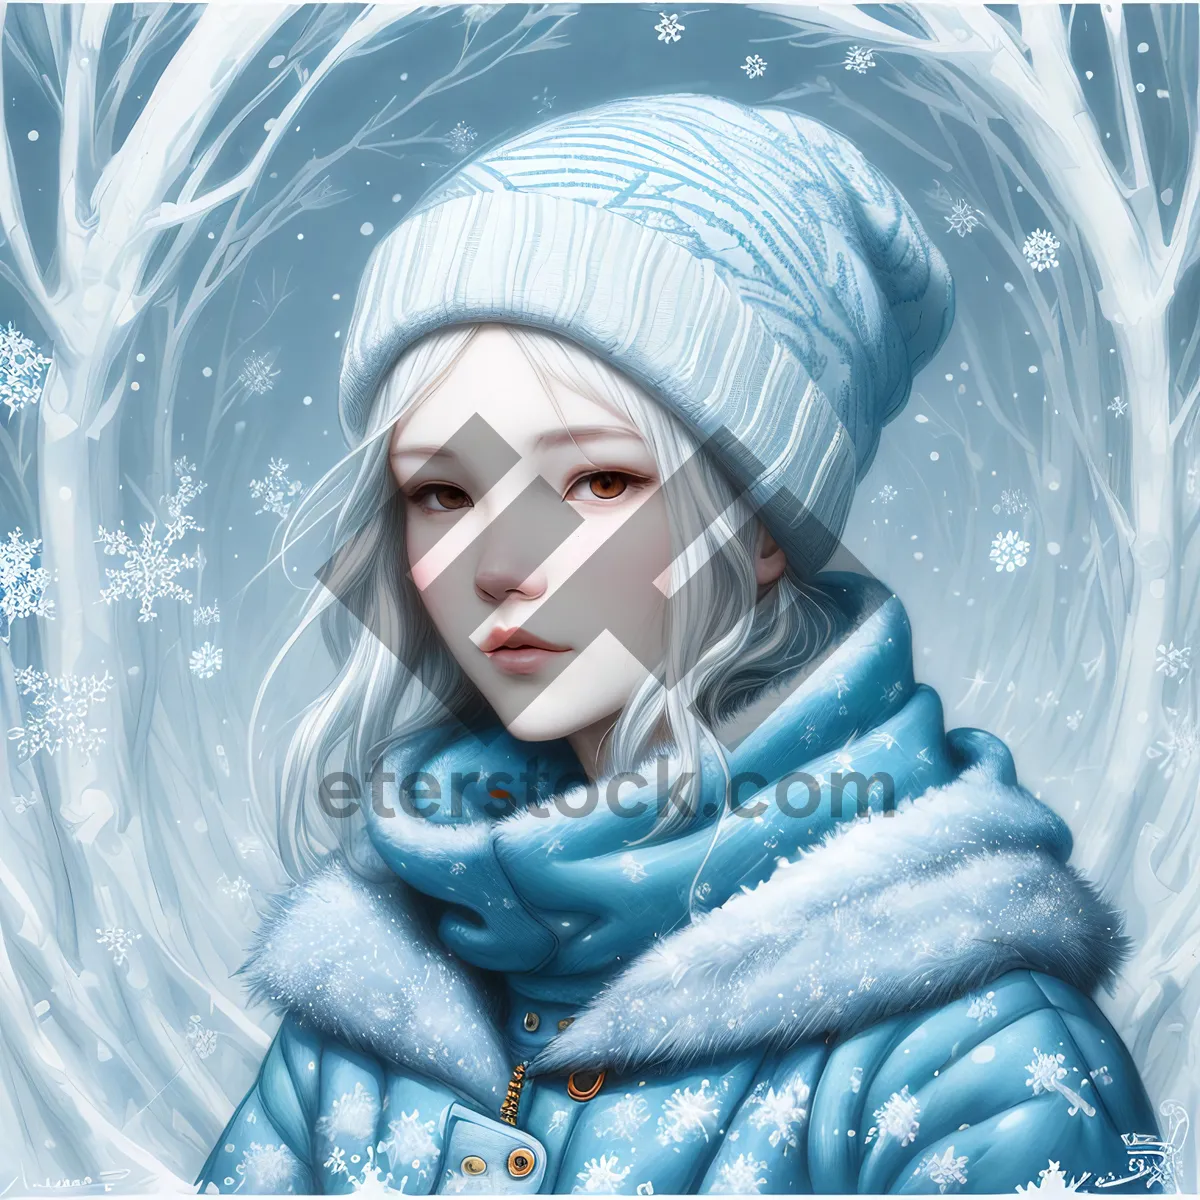 Picture of Joyful Winter Celebration - Smiling Lady in Pretty Hat